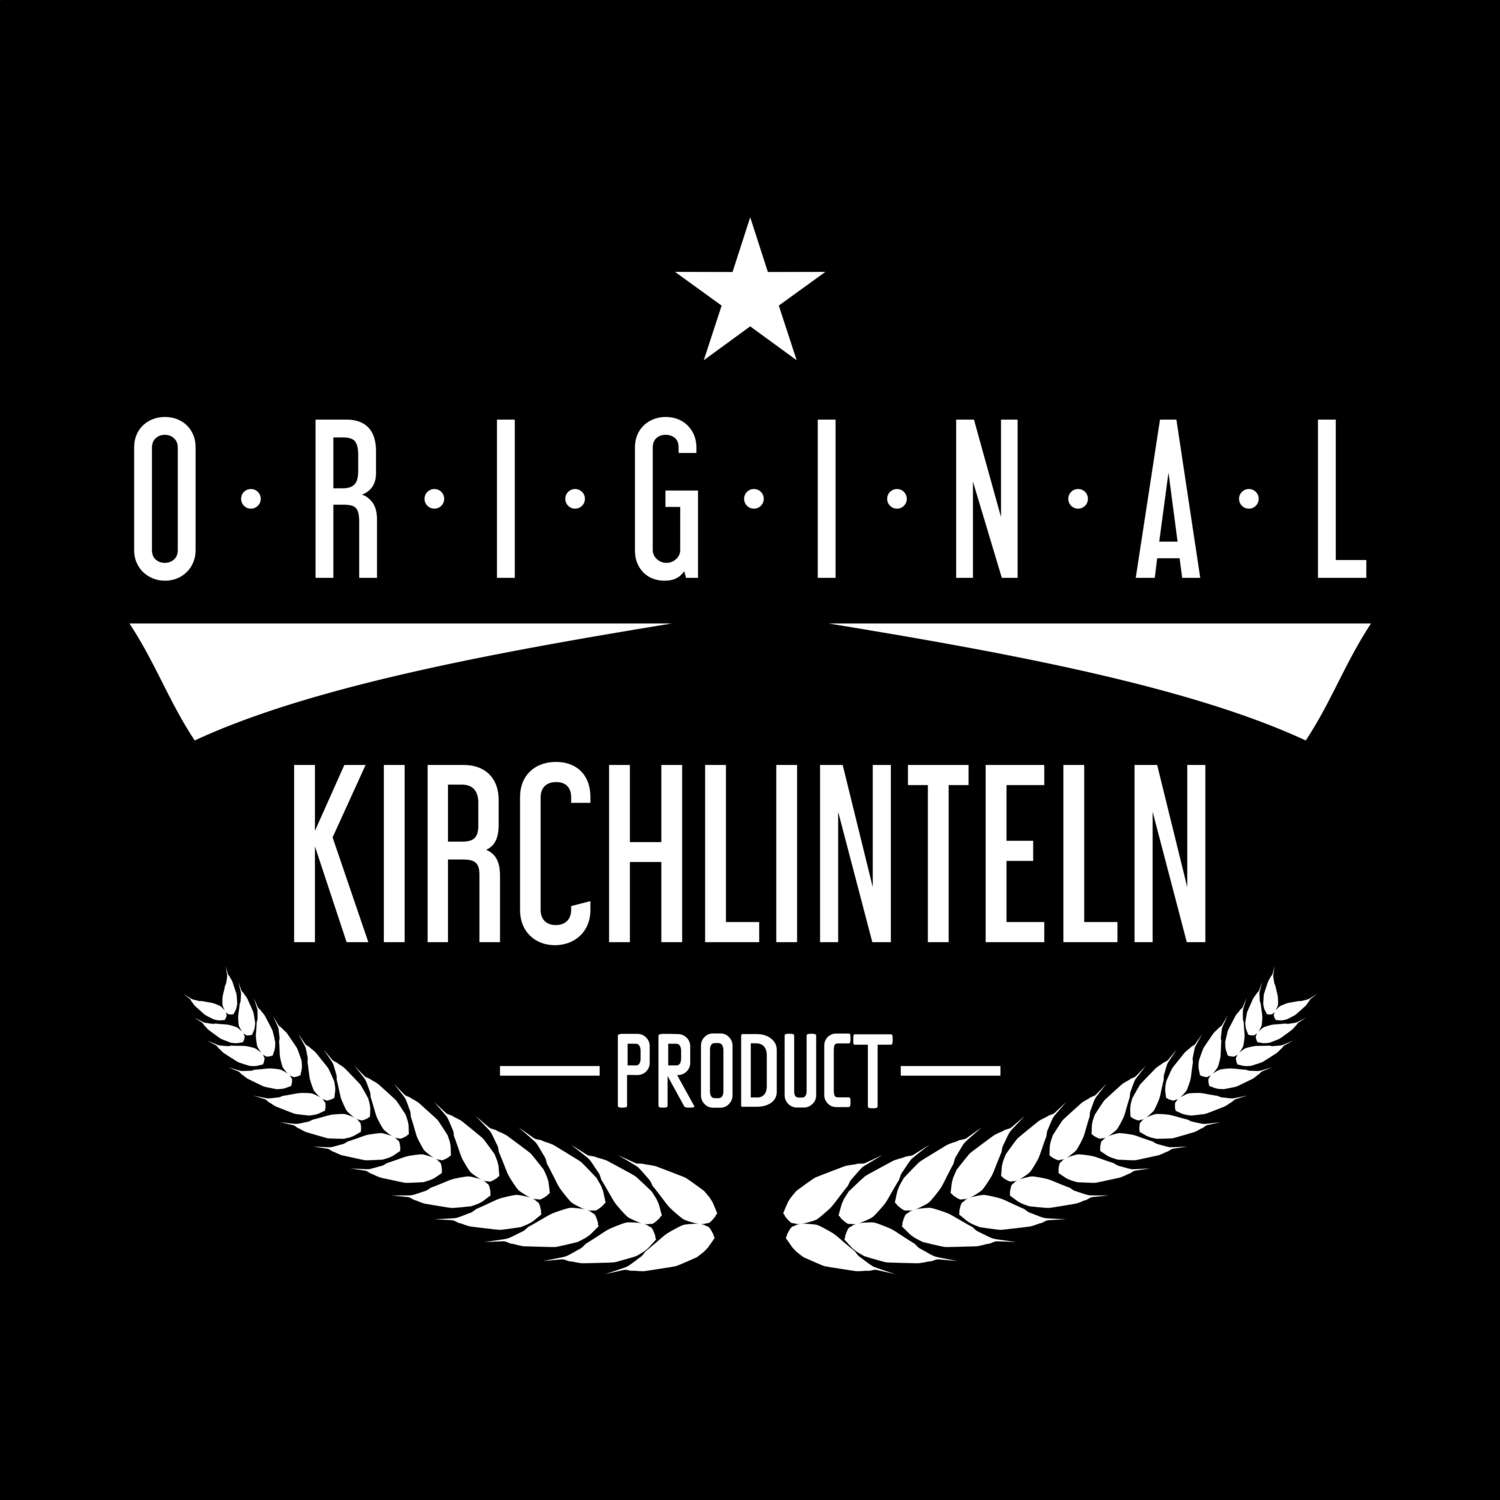 Kirchlinteln T-Shirt »Original Product«